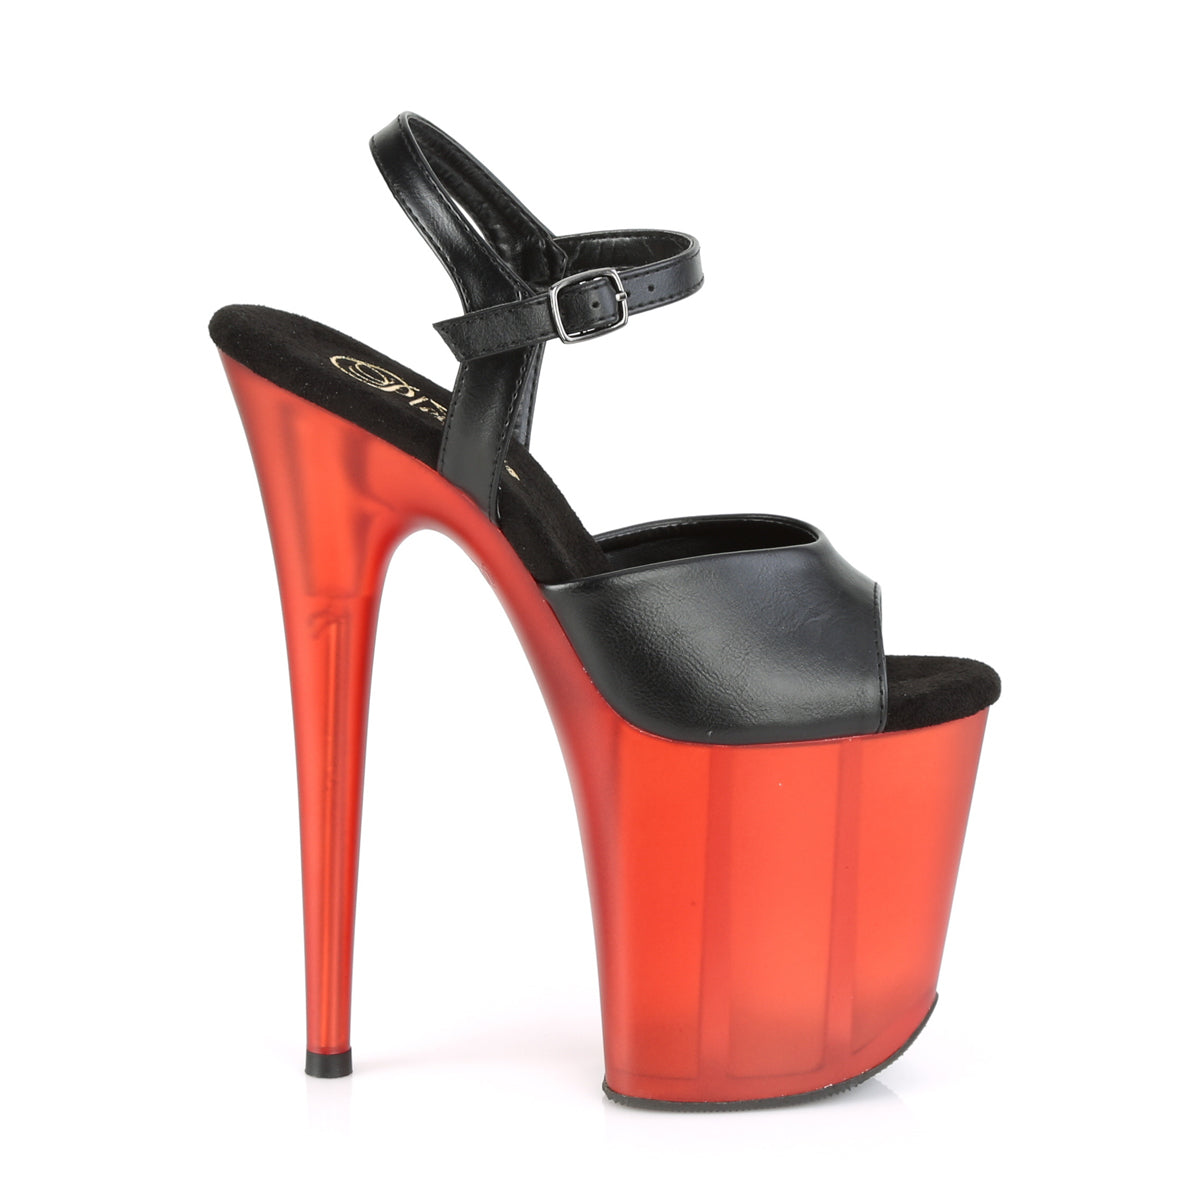 FLAMINGO-809T Black & Red Ankle Peep Toe High Heel